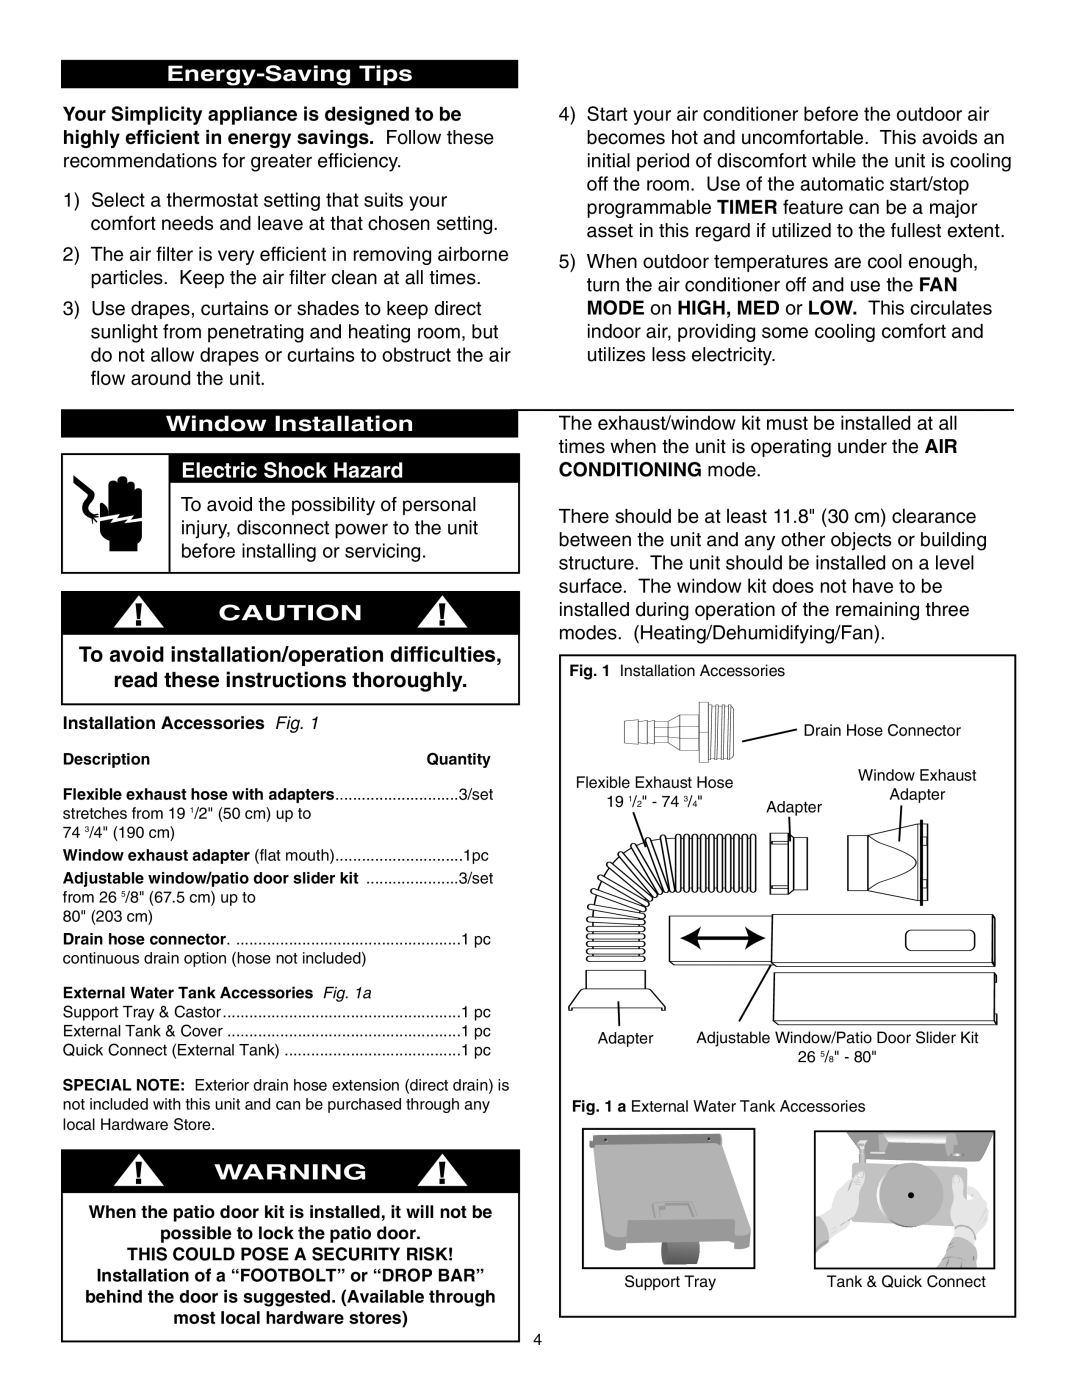 Danby SPAC8499 Energy-SavingTips, Window Installation Electric Shock Hazard, To avoid installation/operation difficulties 